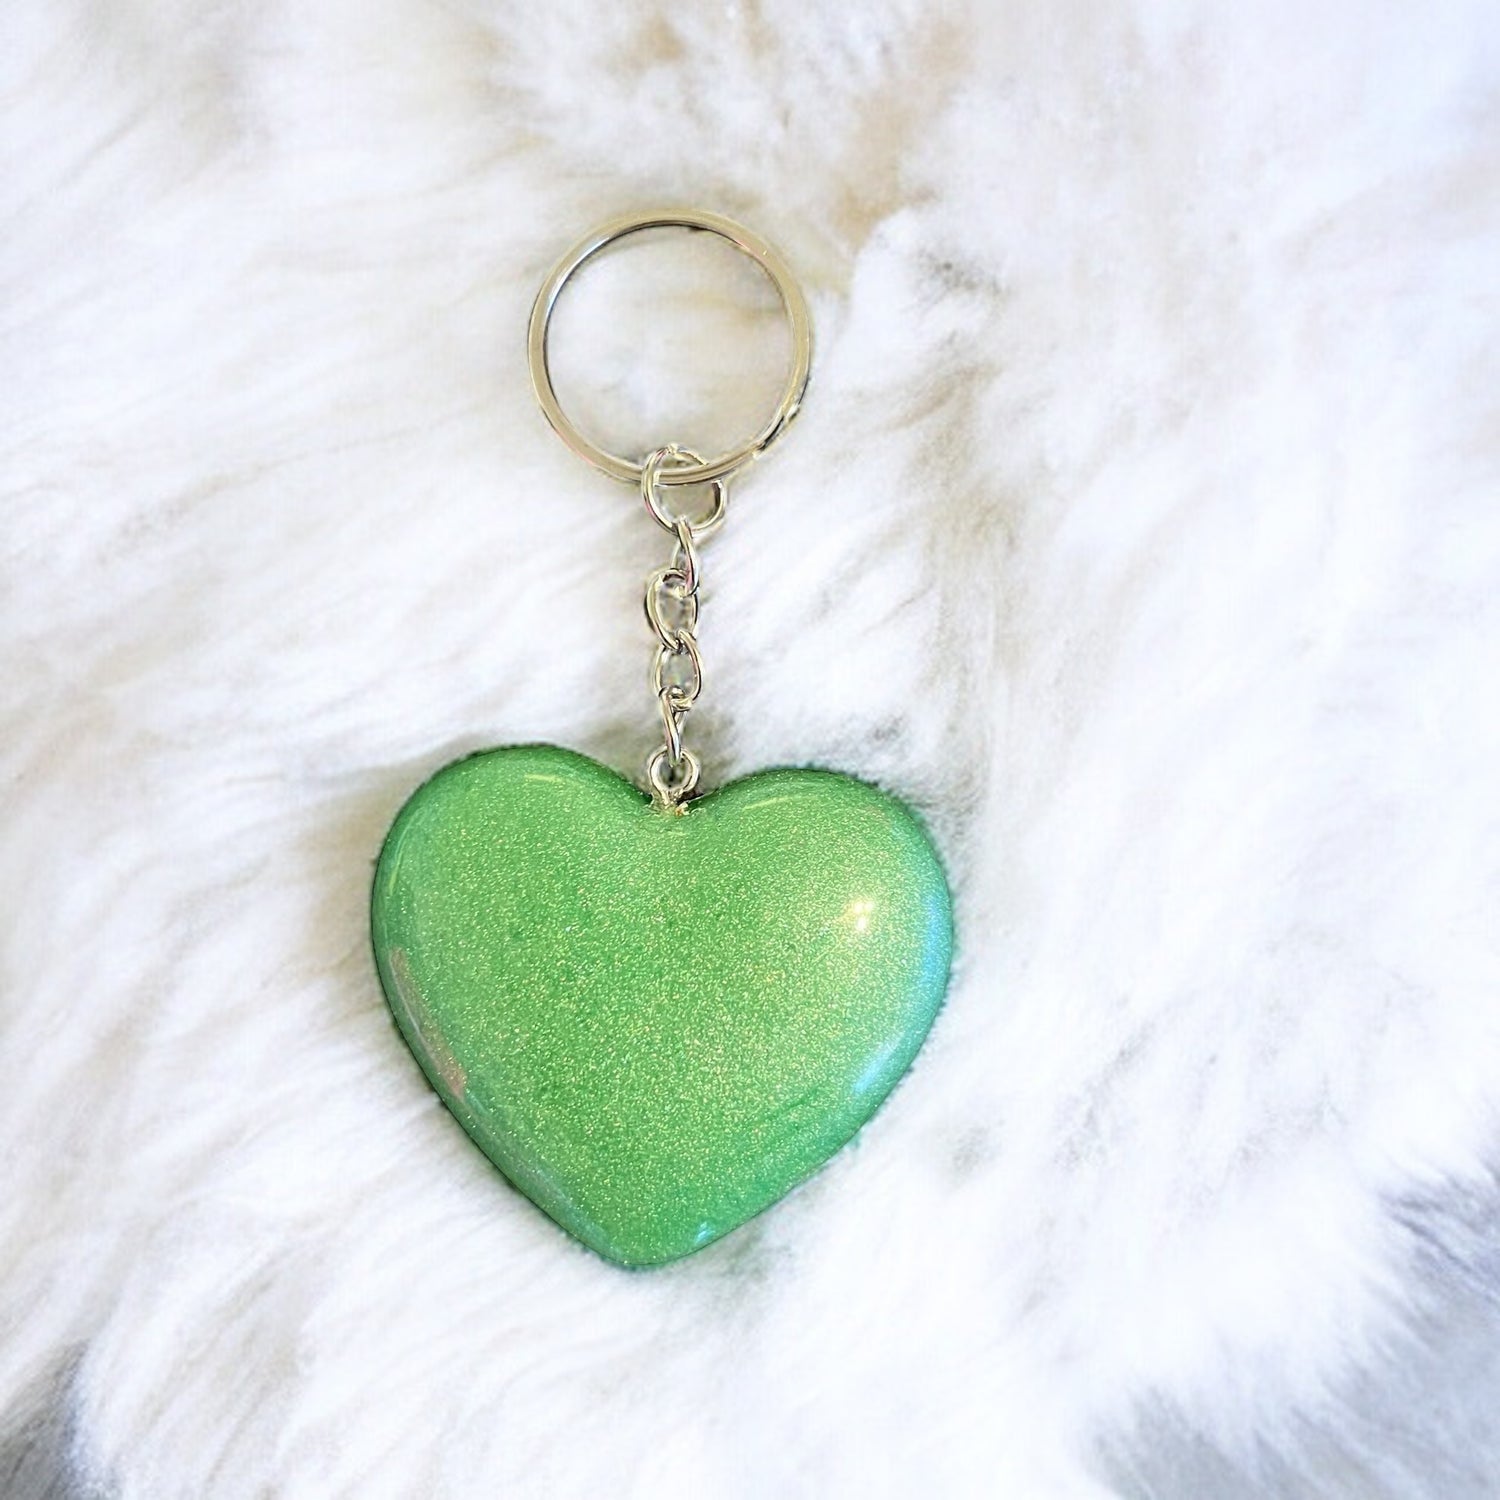 Green Heart Keychain on white furry rug